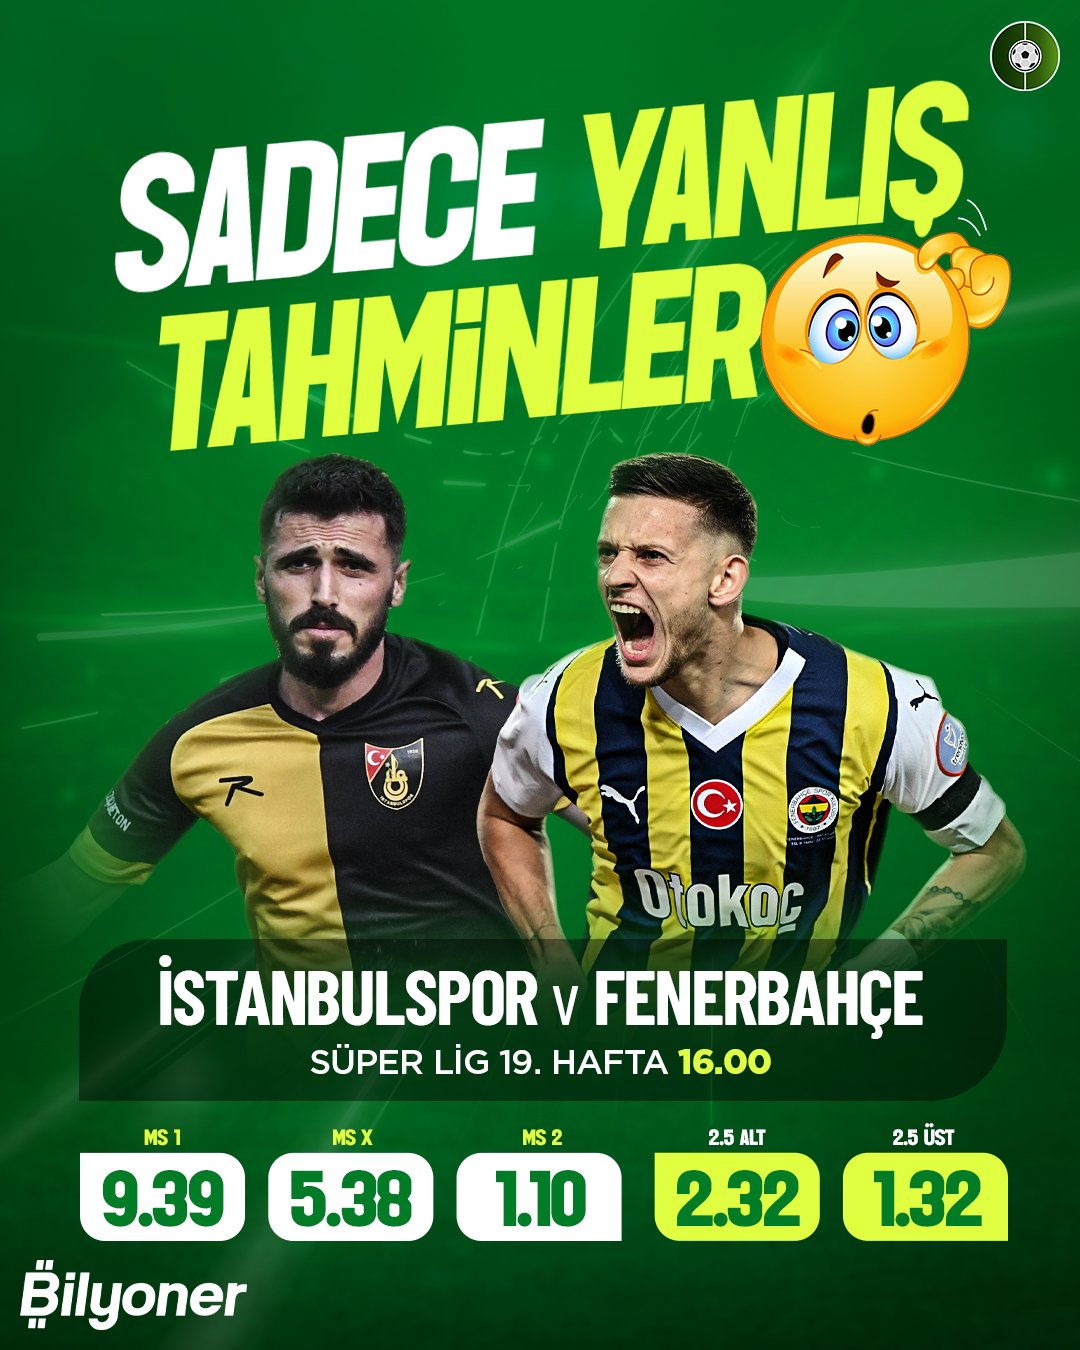 Fenerbahçe x Galatasaray: A Maior Rivalidade do Futebol Turco